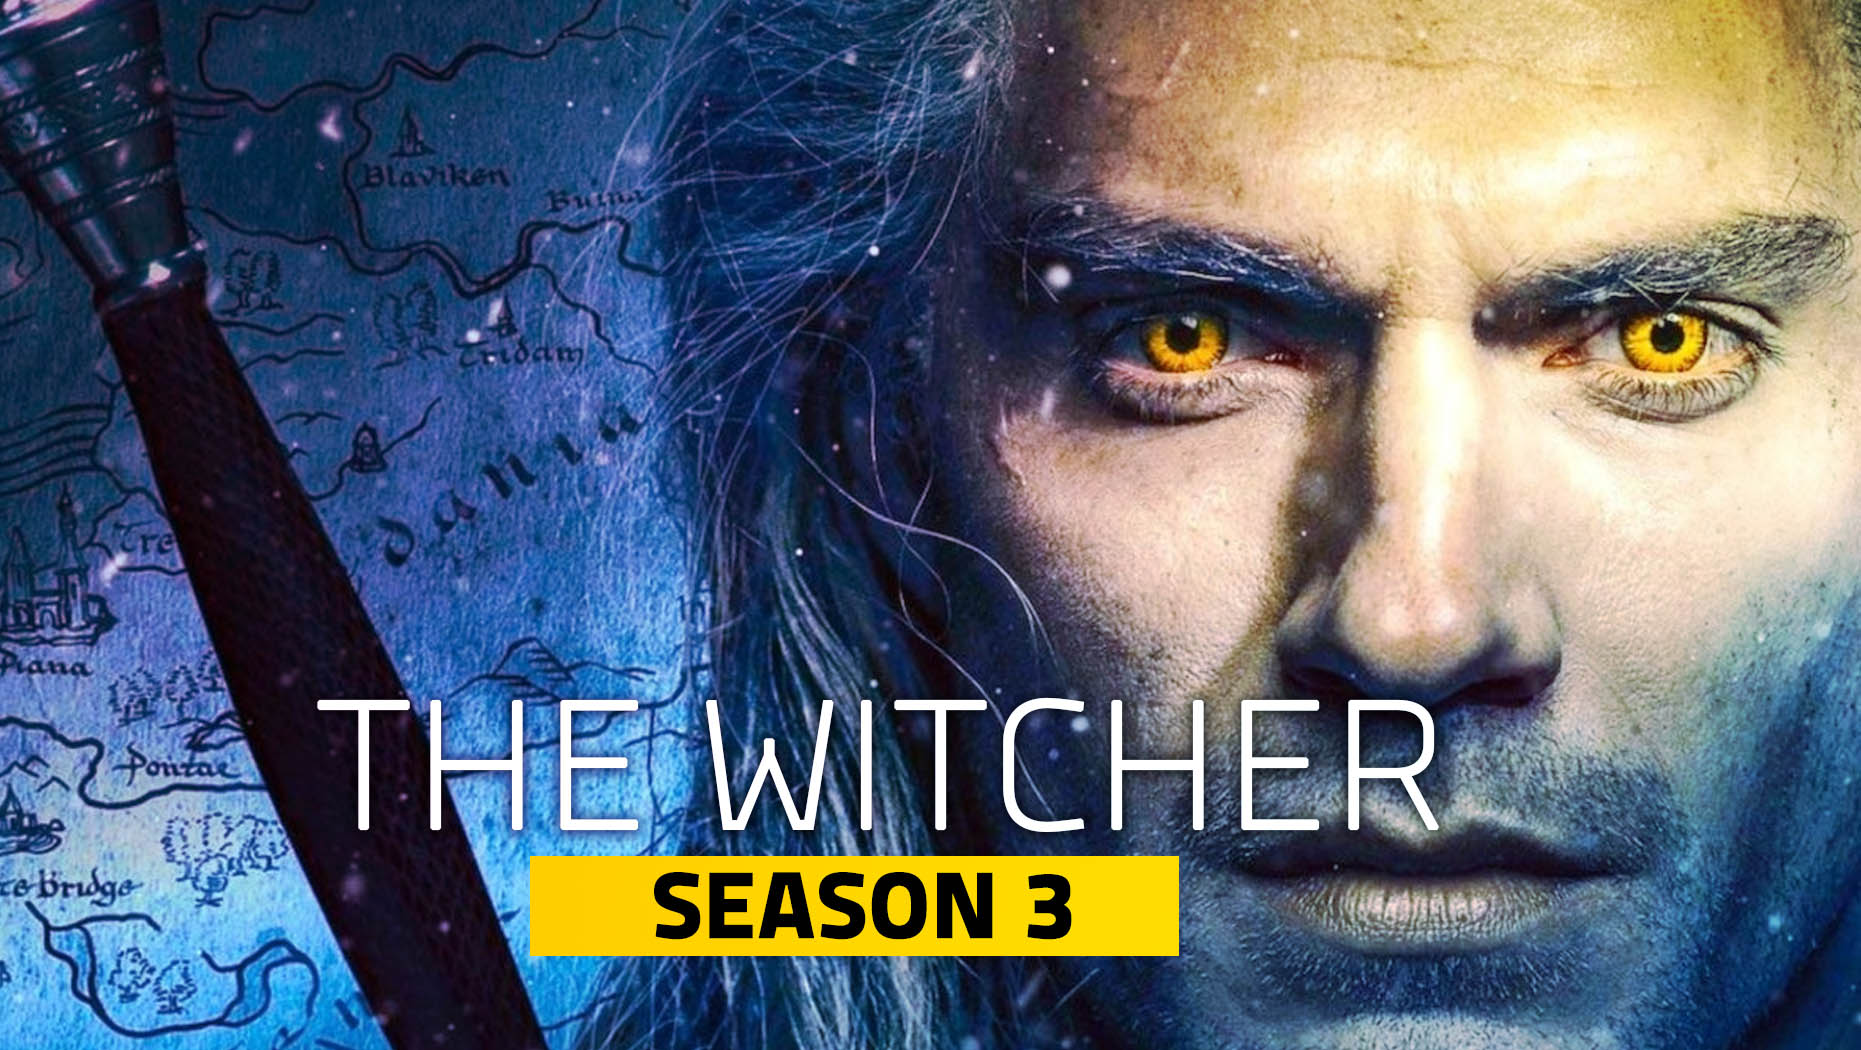 The Witcher Season 3